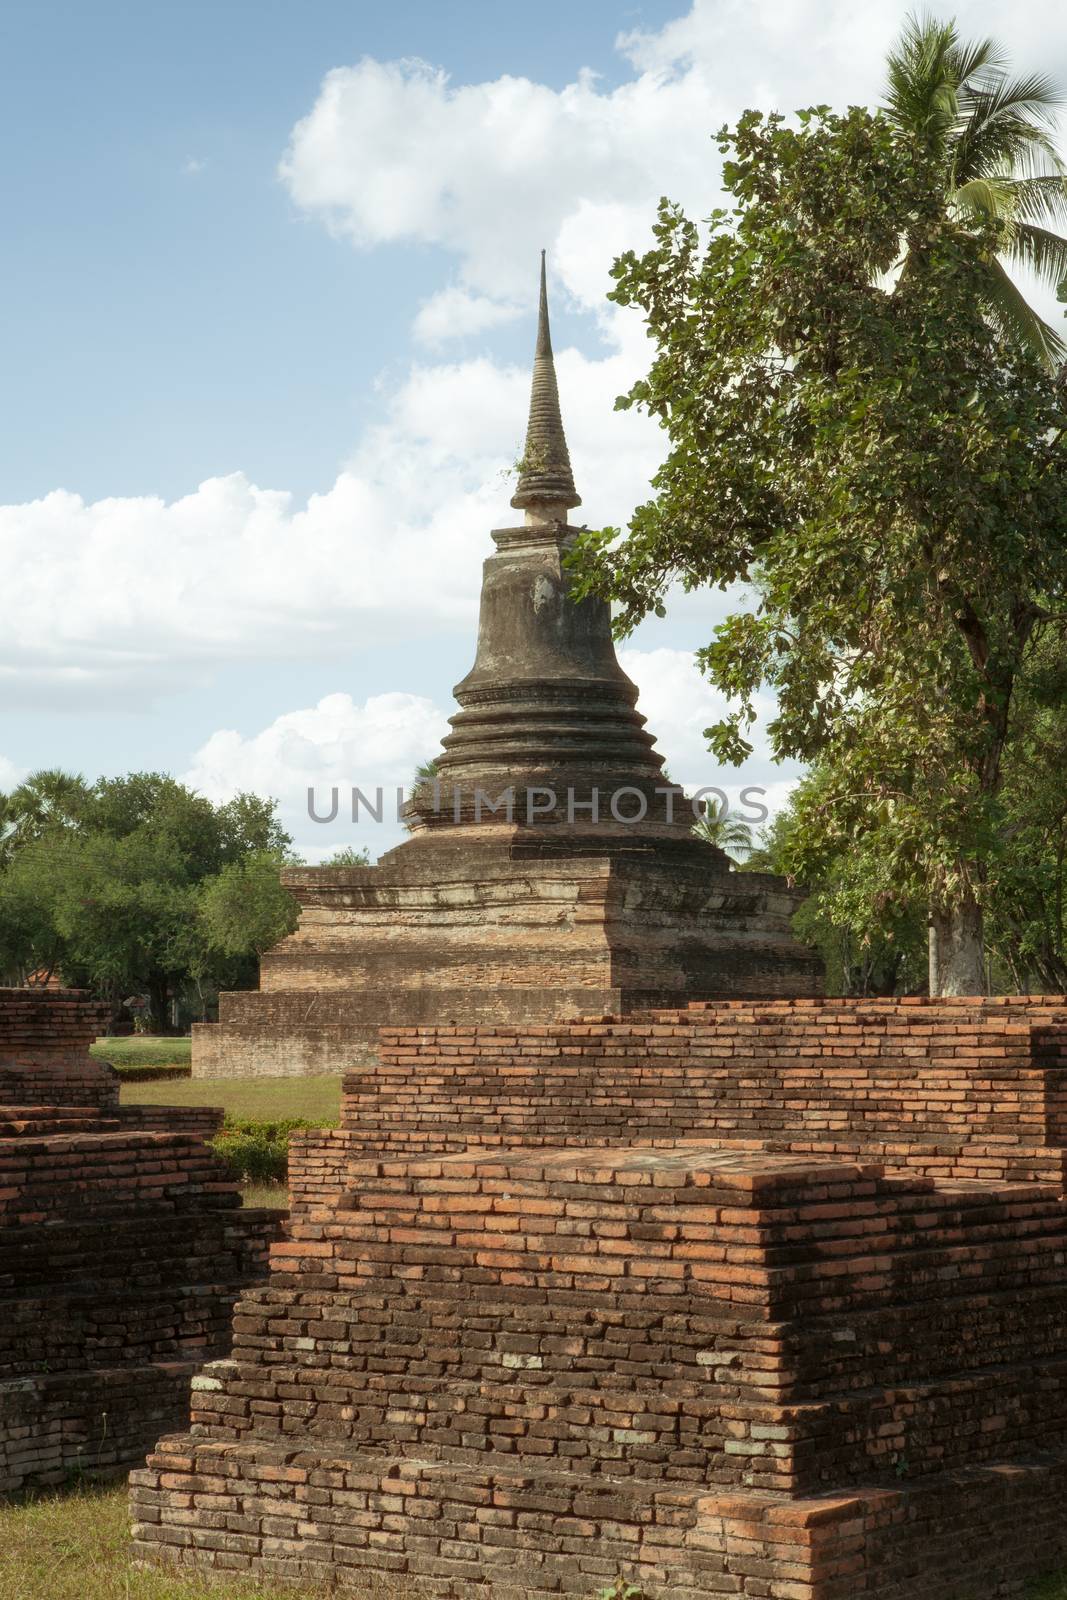 panorama view of ancient  pagoda  in Ayutthaya historical park, Thailand